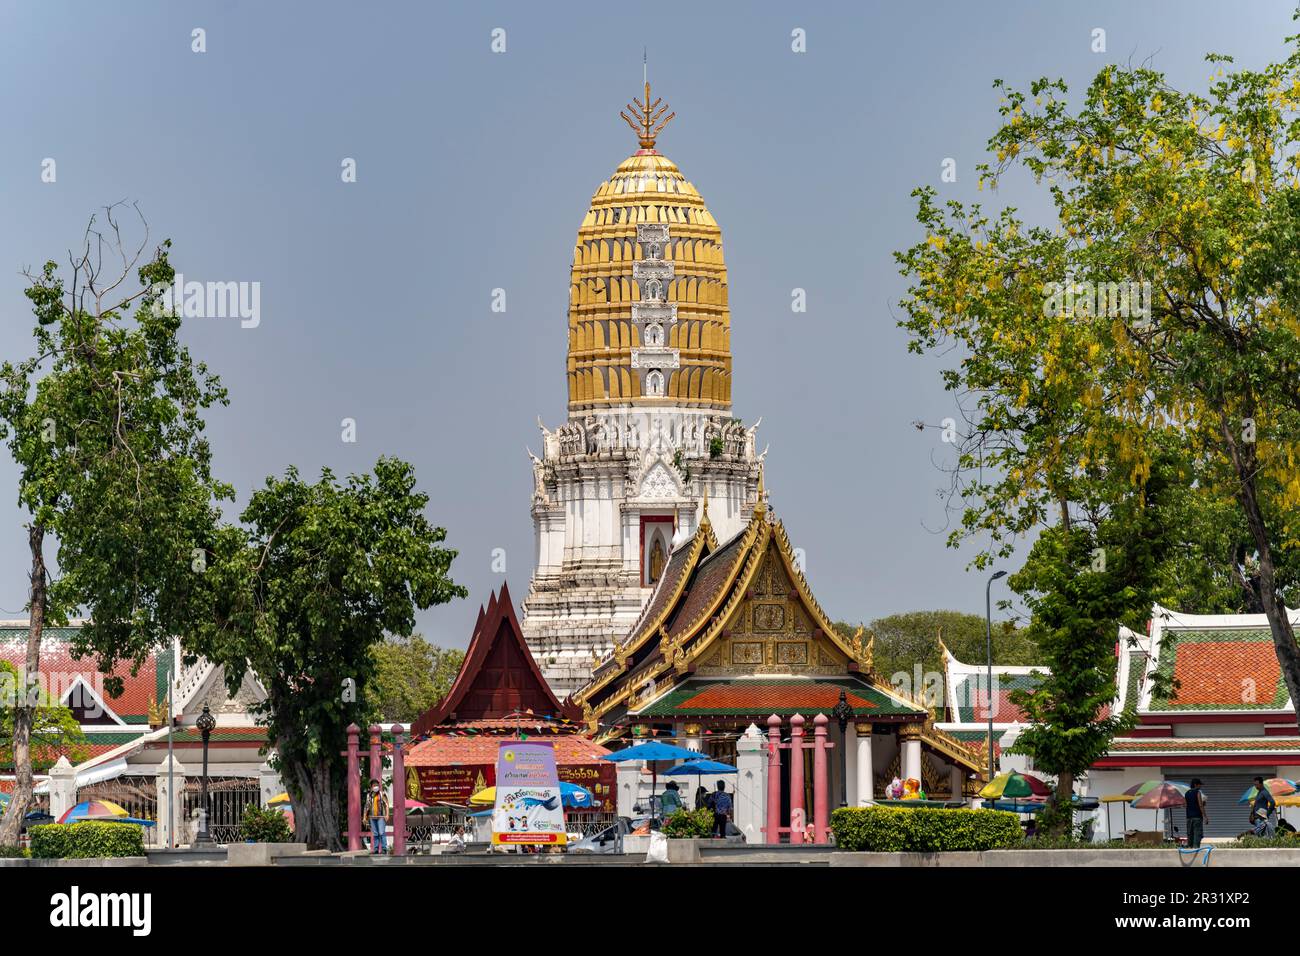 Prang des  buddhistischen Tempel Wat Phra Si Rattana Mahathat in Phitsanulok, Thailand, Asien  |  Wat Phra Si Rattana Mahathat  buddhist temple prang Stock Photo